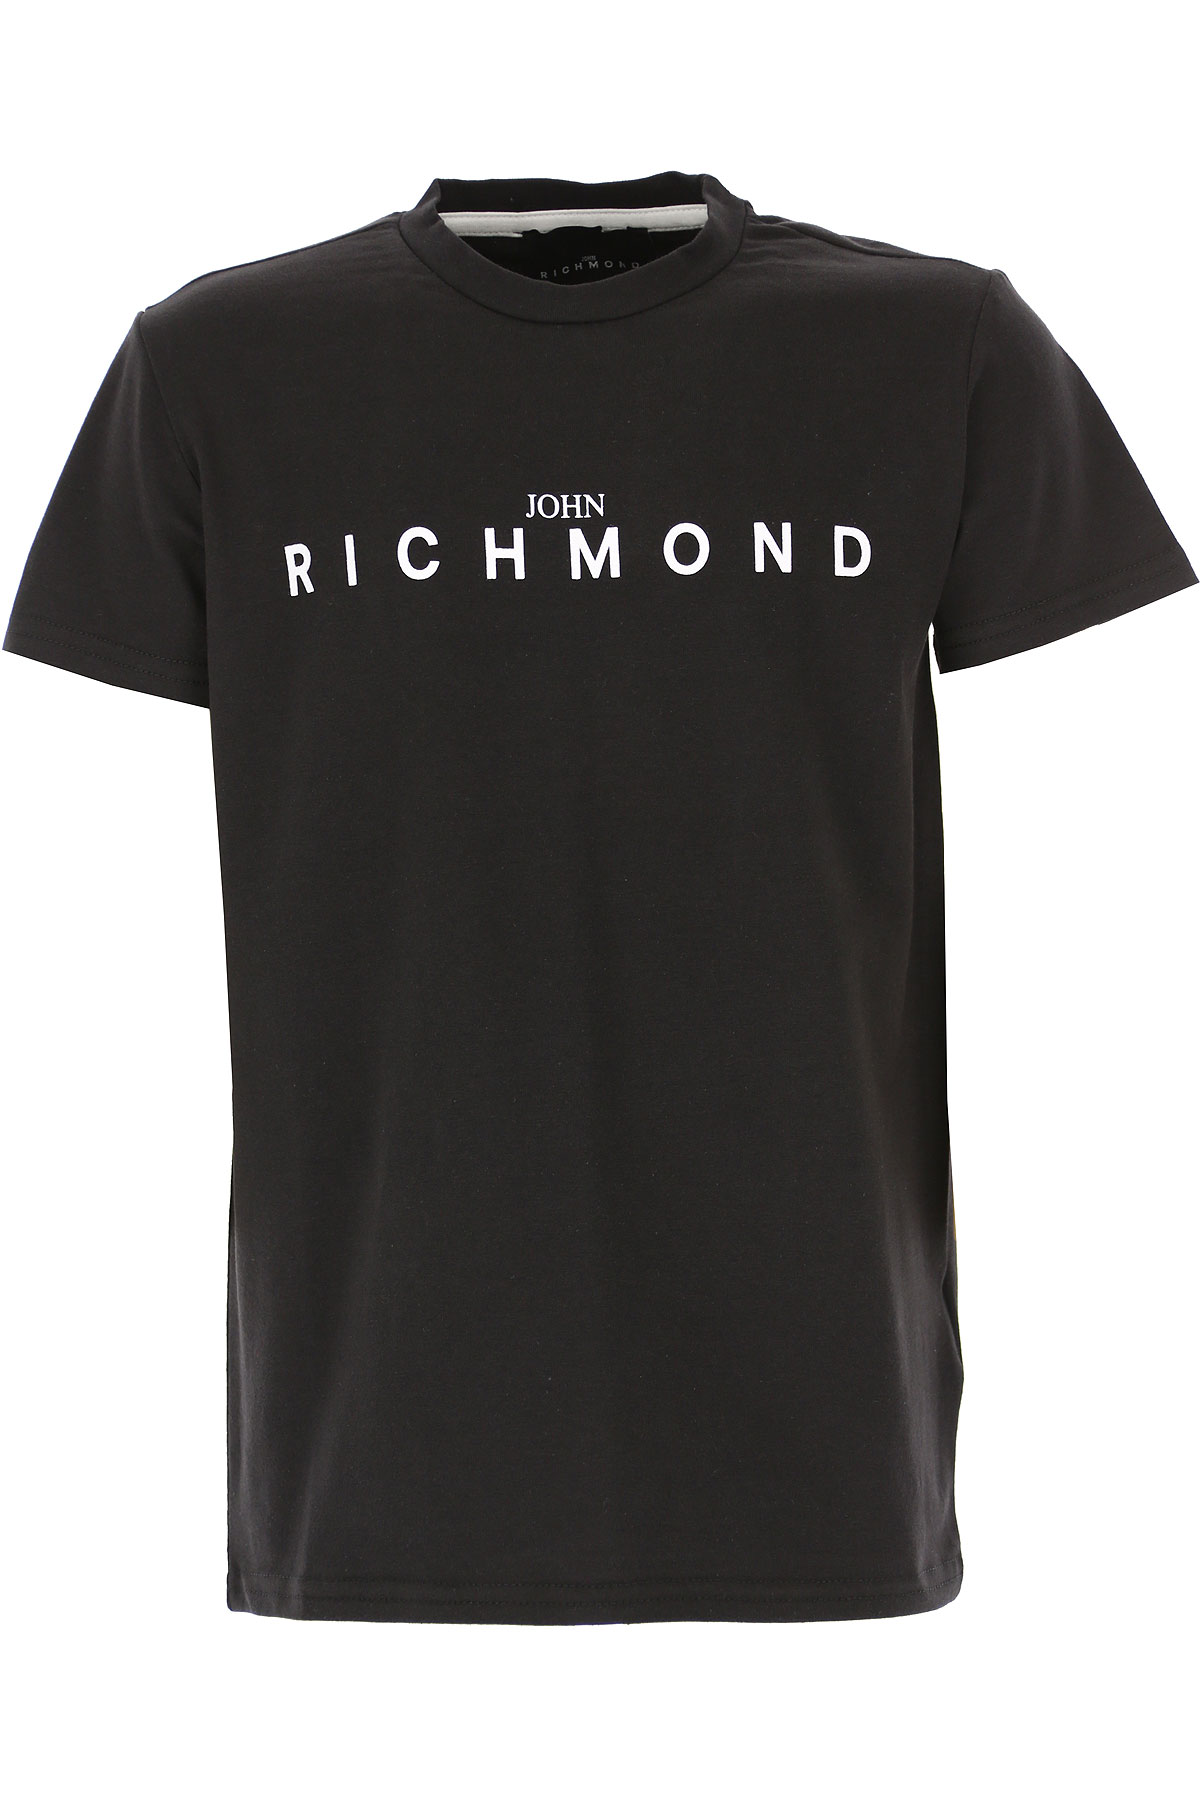 Richmond Kinder T-Shirt für Jungen Günstig im Sale, Schwarz, Terracotto-Fliesen, 2017, 10Y 12Y 14Y 16Y 4Y 6Y 8Y